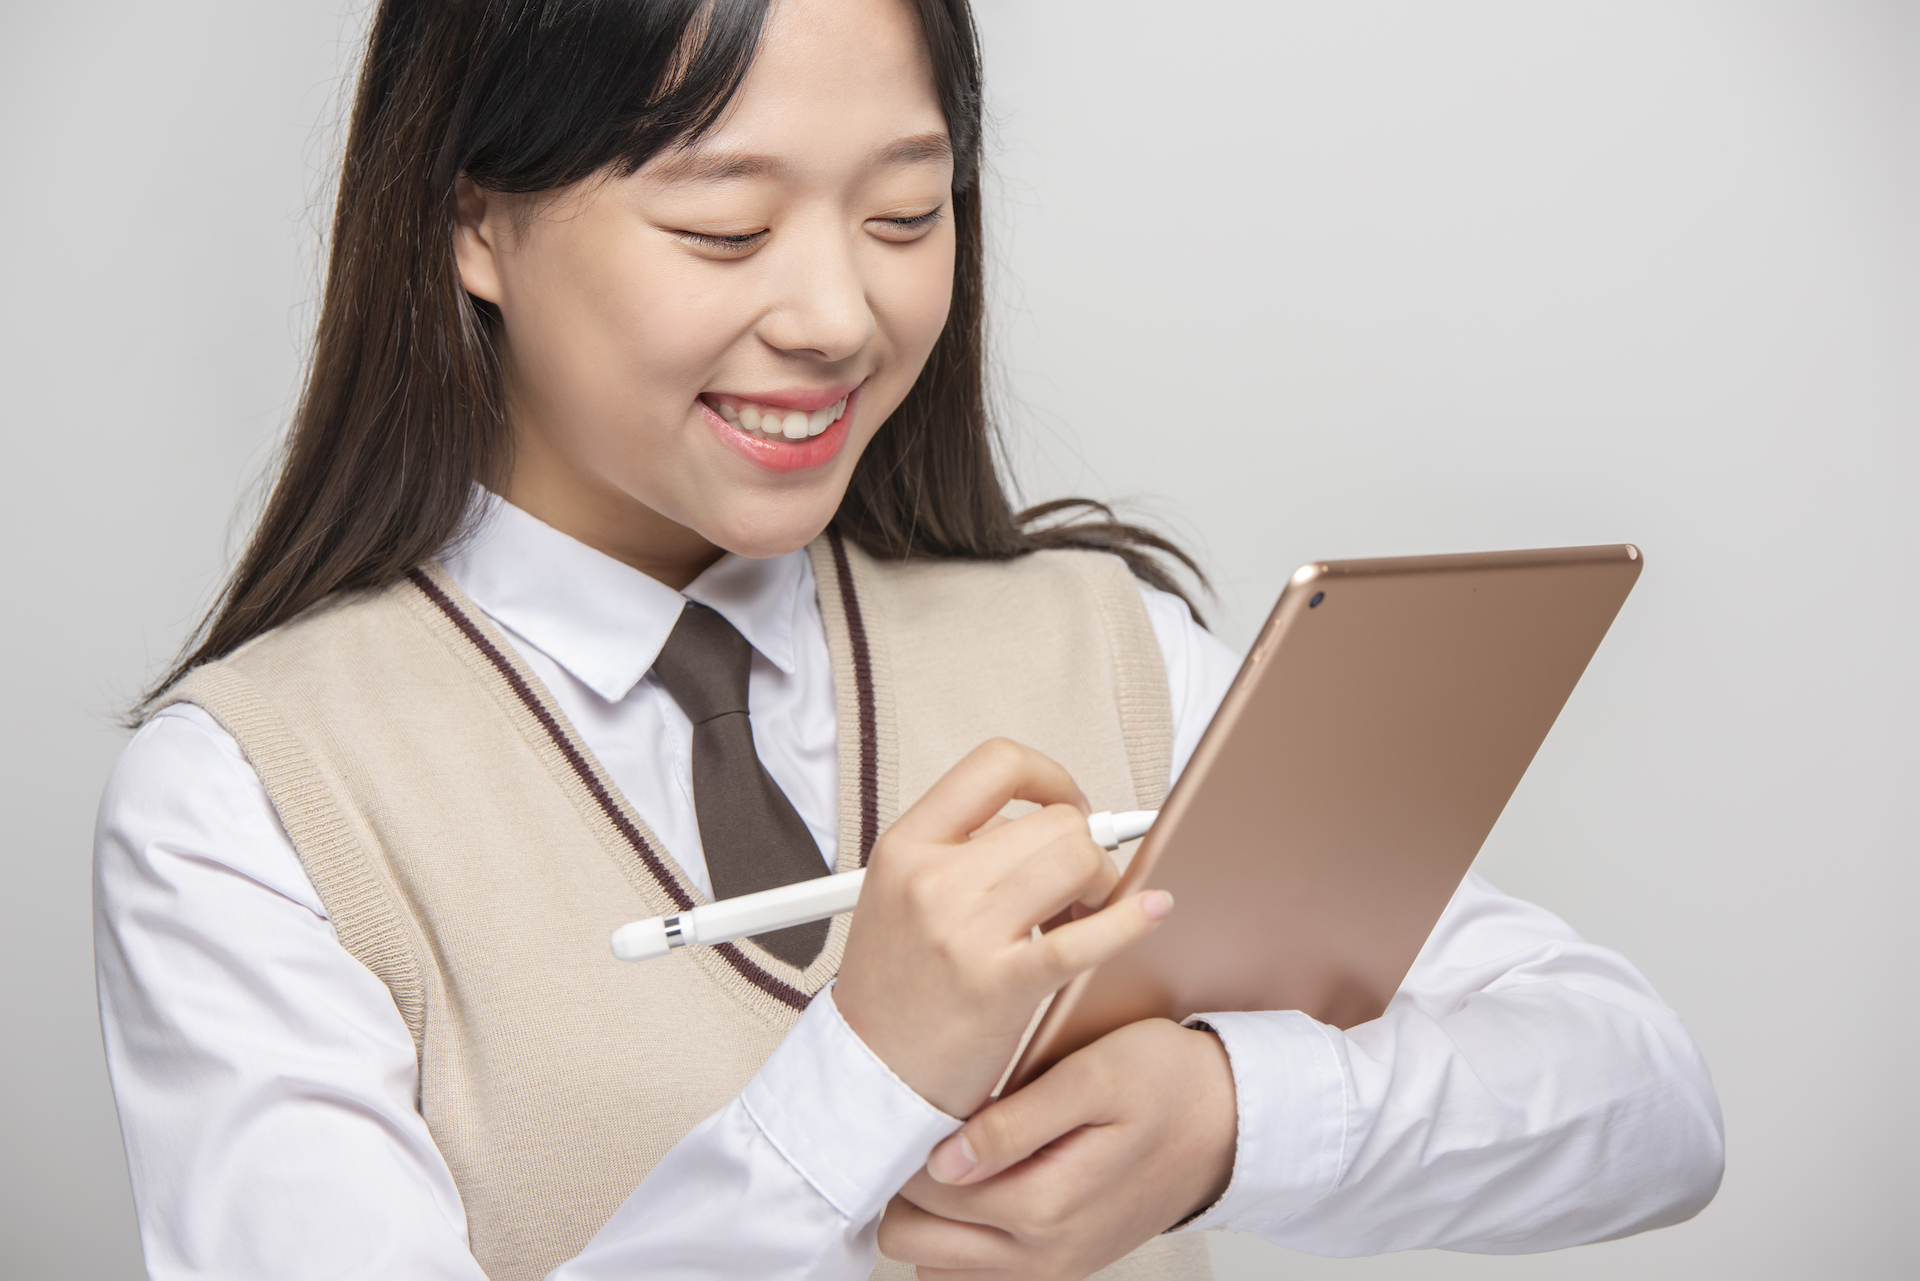 Female student using tablet smiling